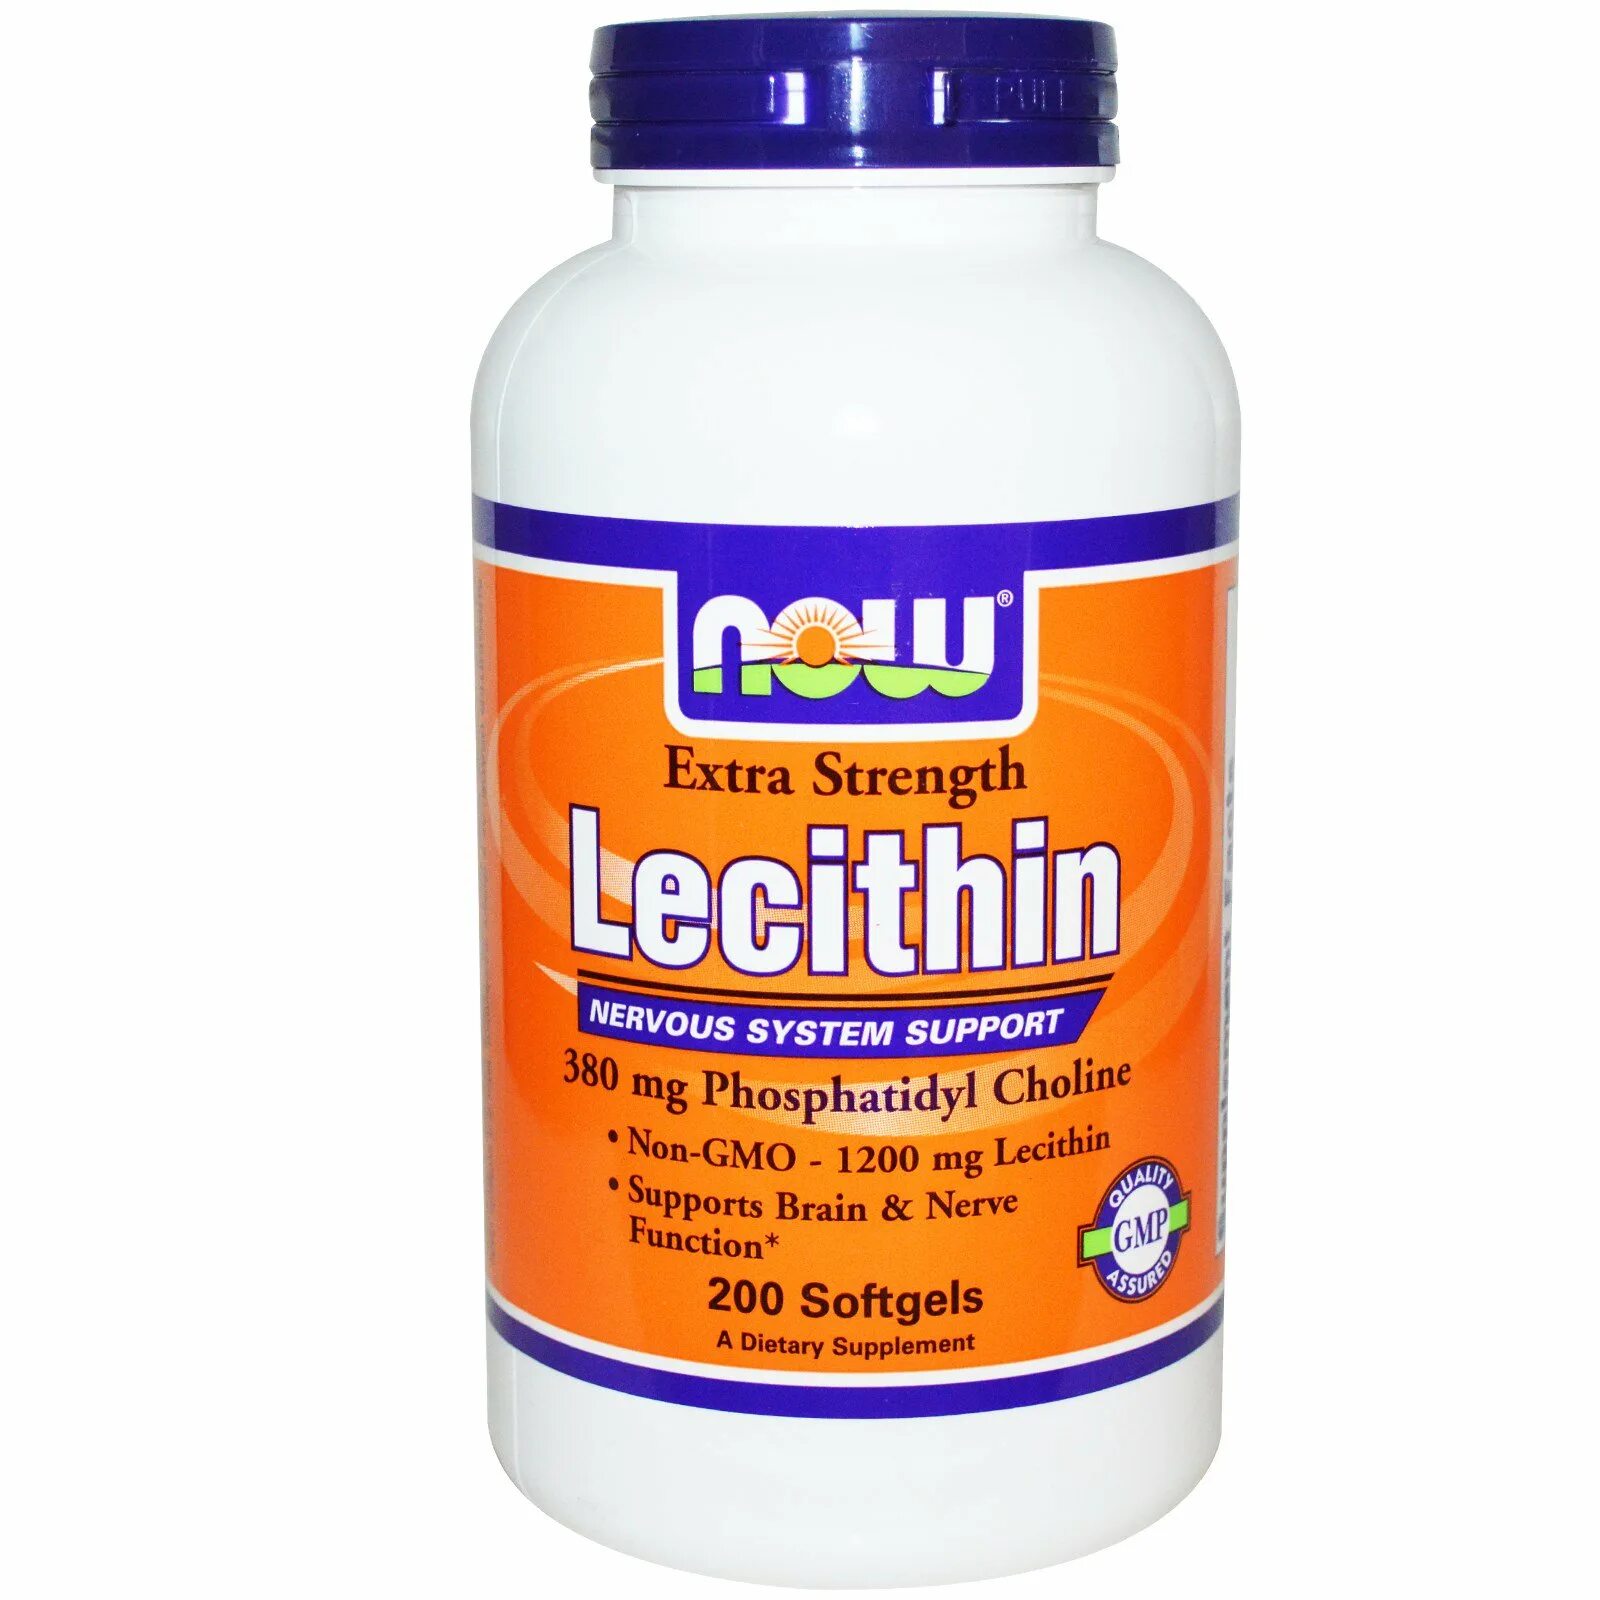 Lecithin 1200 мг. Now Lecithin 1200 MG 200 капс. VPLAB лецитин 1200 MG 120 Софтгель. Now Lecithin 1200mg 200 SGELS. Now lecithin